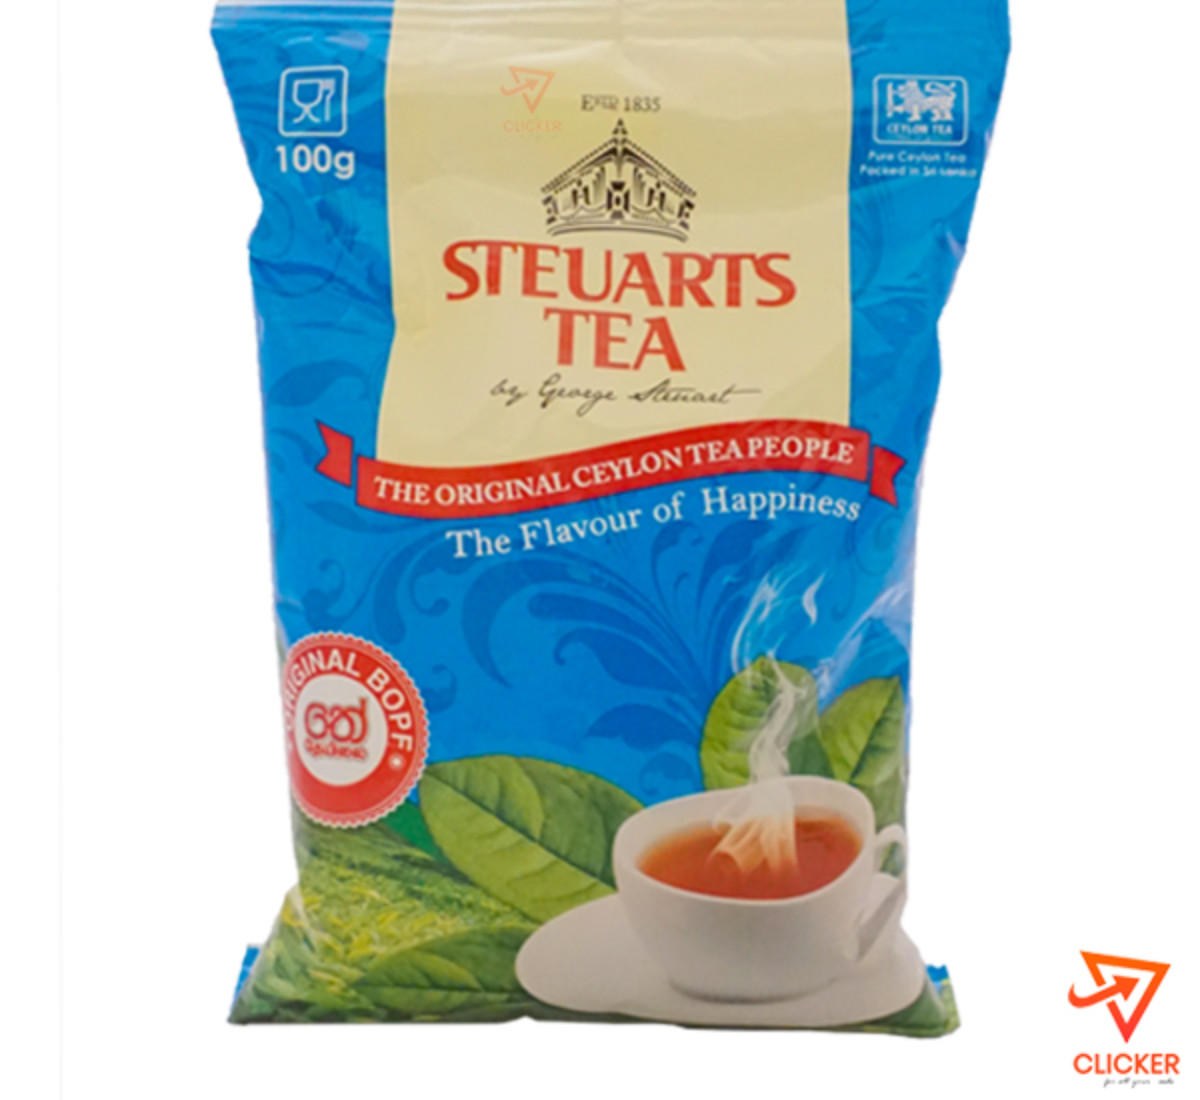 Clicker product 100g GEORGE STEURARTS  tea(50 tea bags) 956